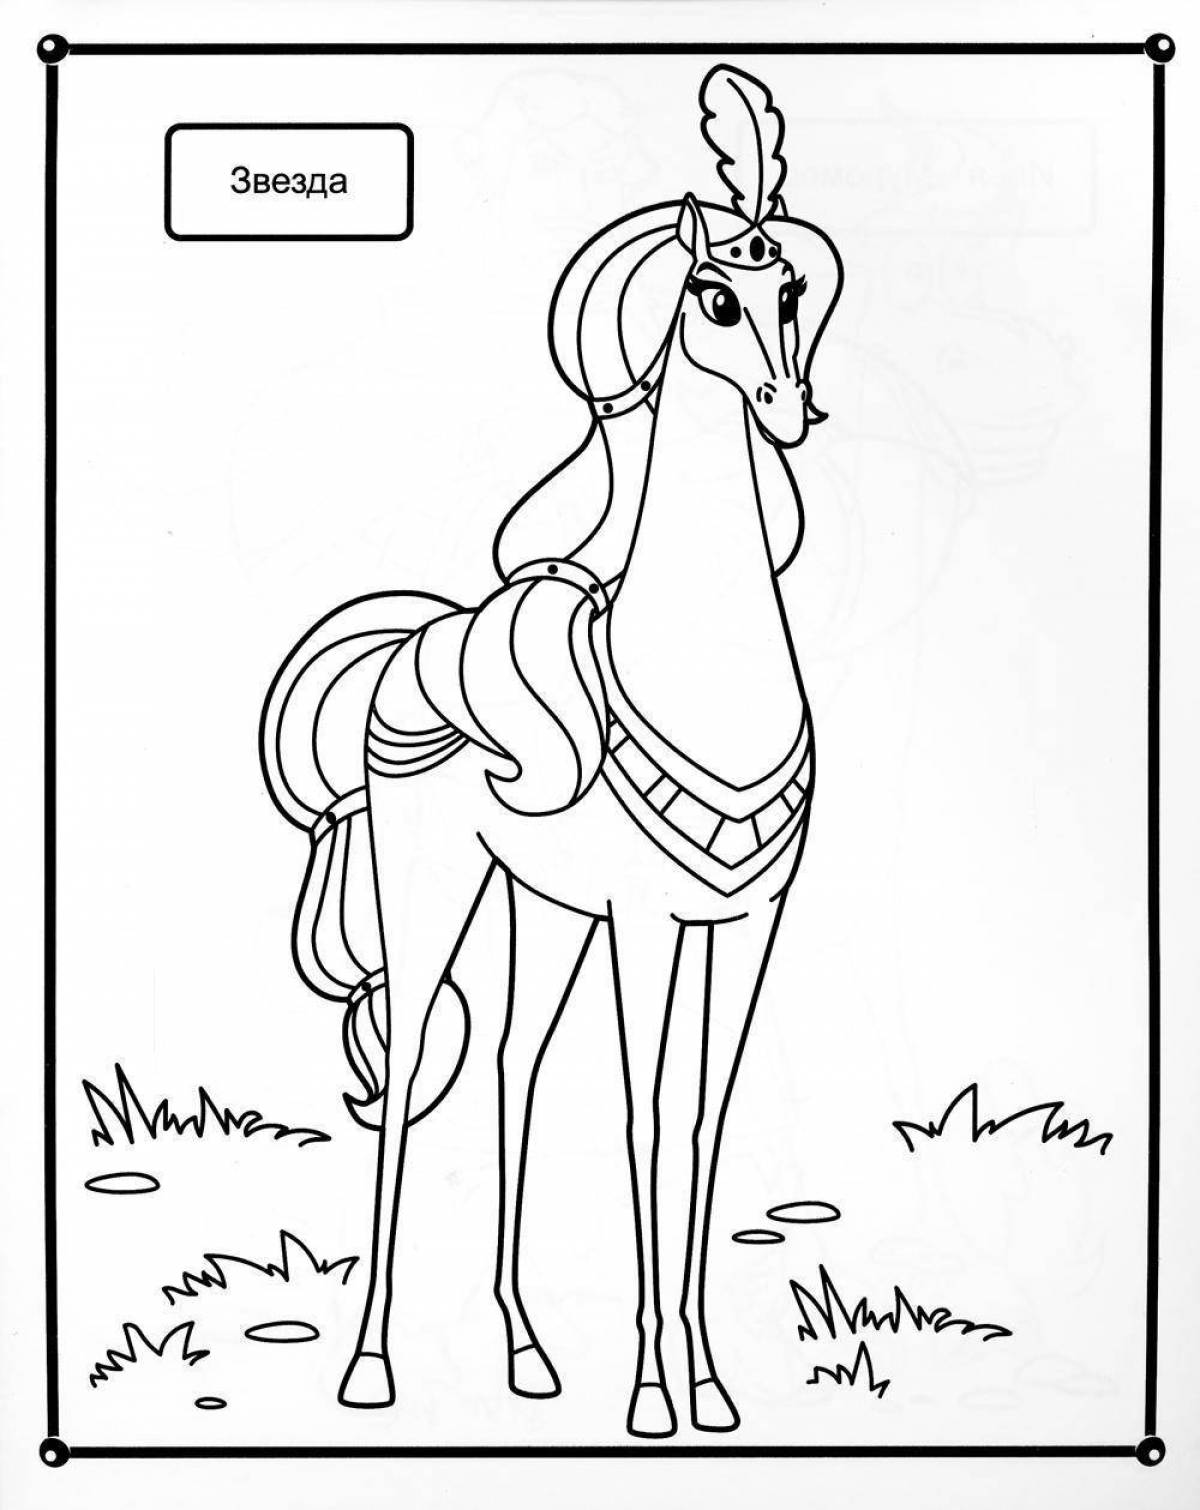 Brilliant three heroes horse julius coloring page